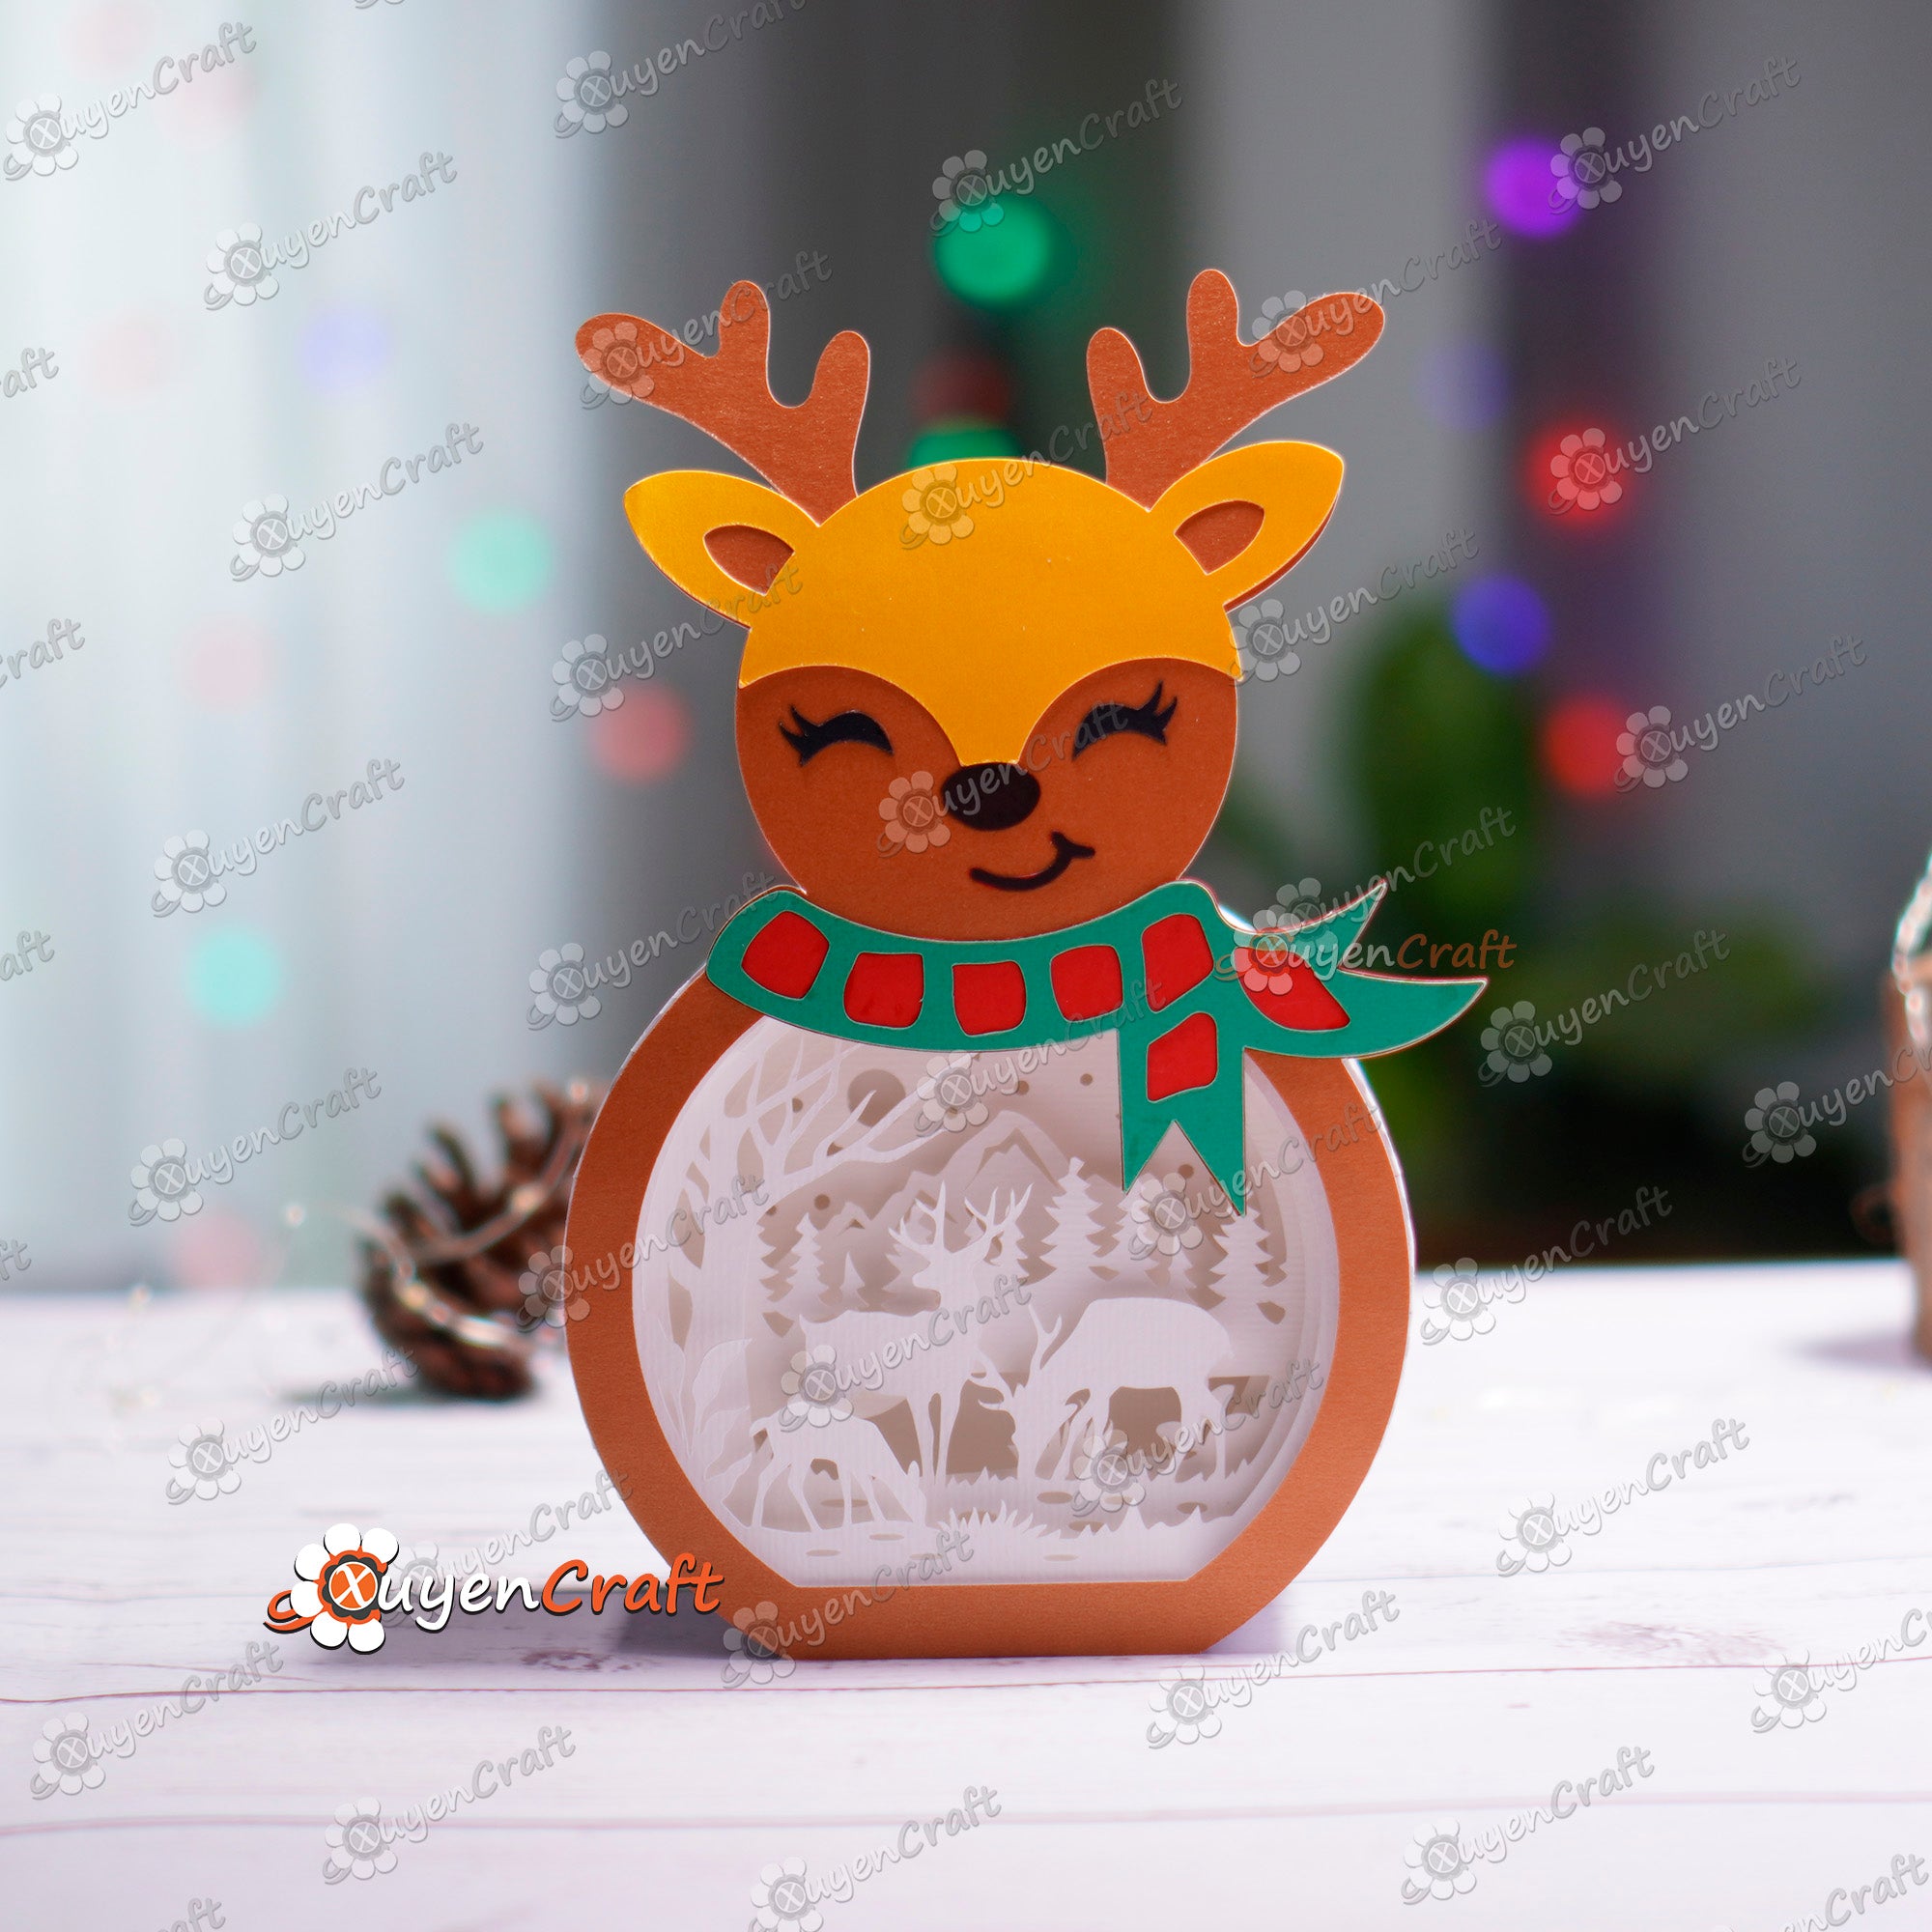 Pack 3 Christmas Shadowbox SVG Template for creating Reindeer, Santa Claus, Snowman Shadow Box